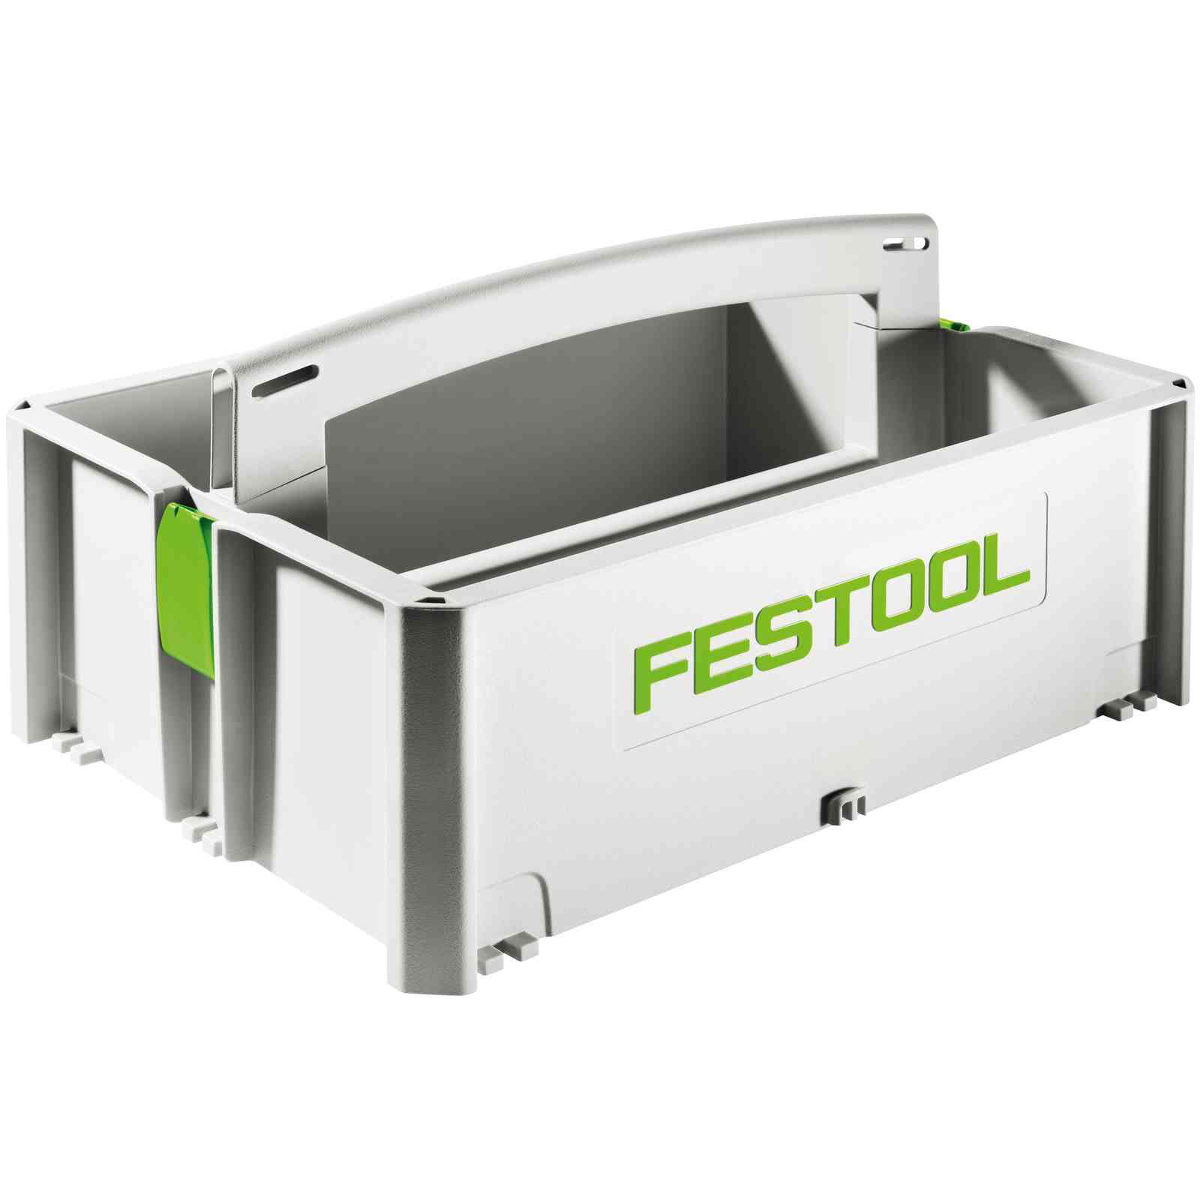 Toolbox 1.1. Контейнер Systainer Festool. Систейнер 1 Фестул. Festool Toolbox. Festool ящик.